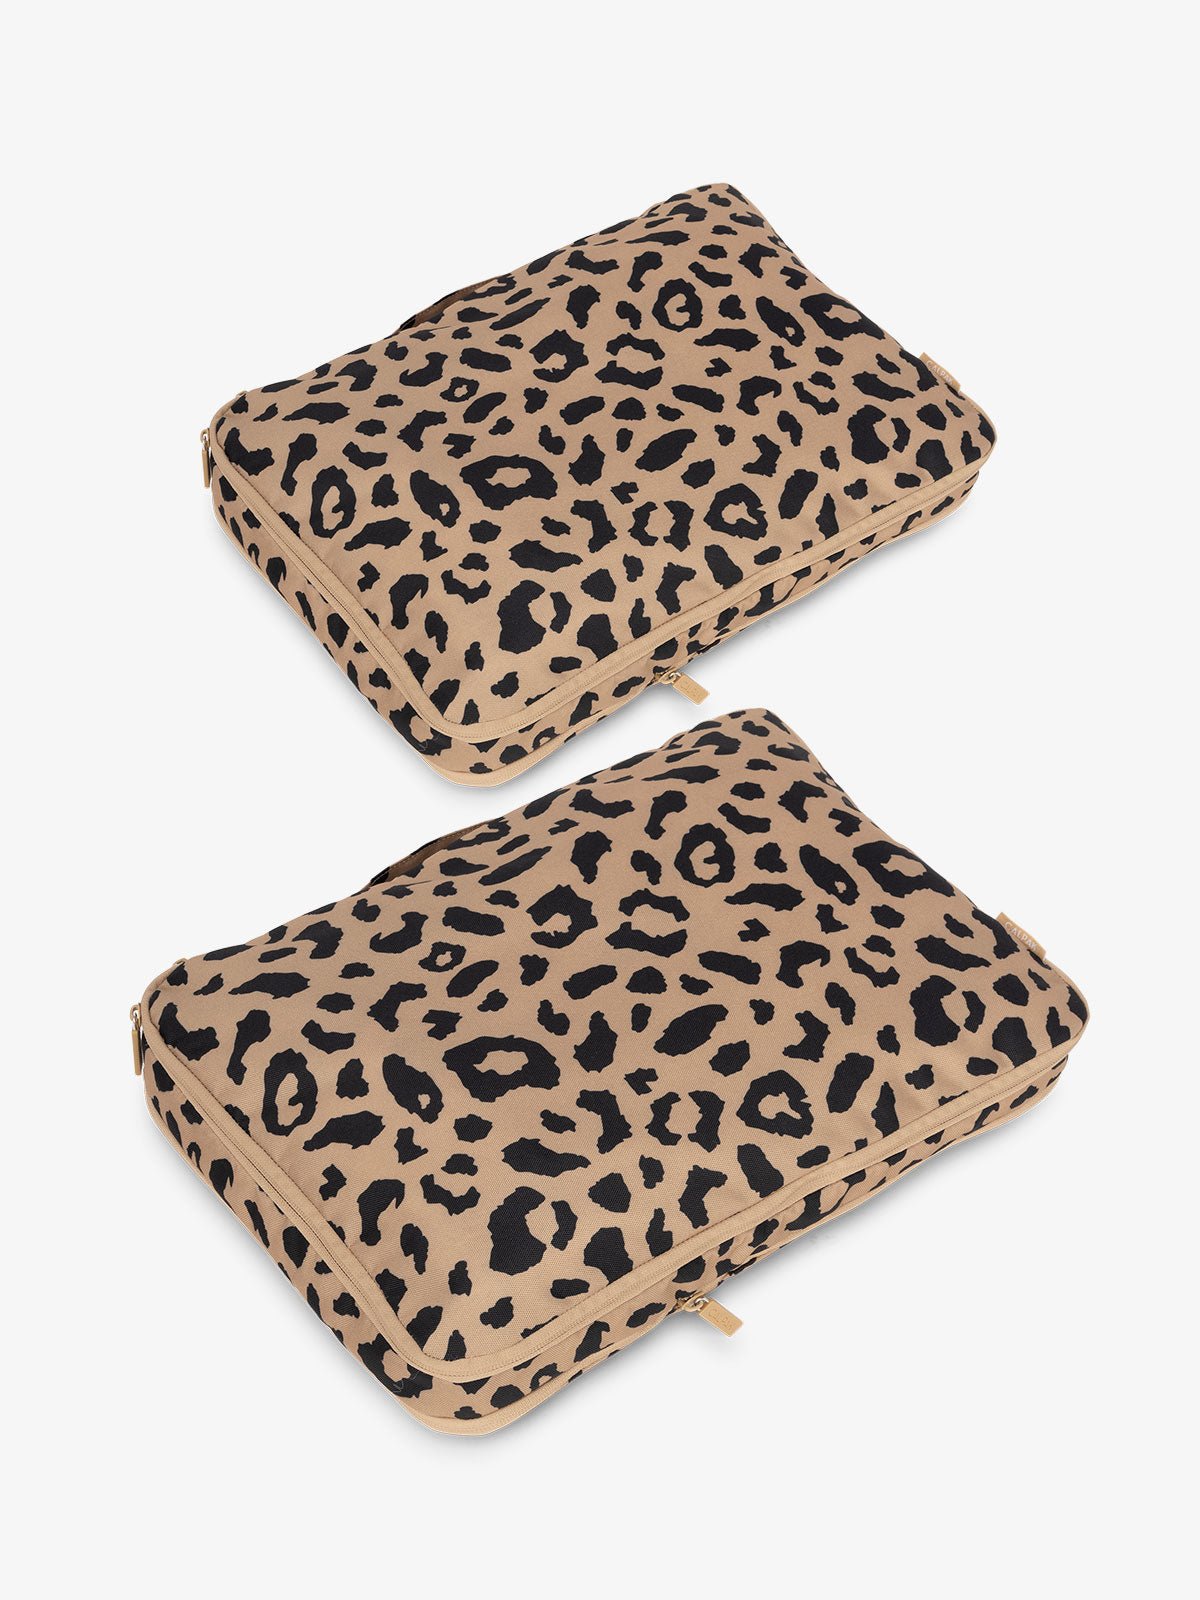 CALPAK large compression packing cubes in cheetah